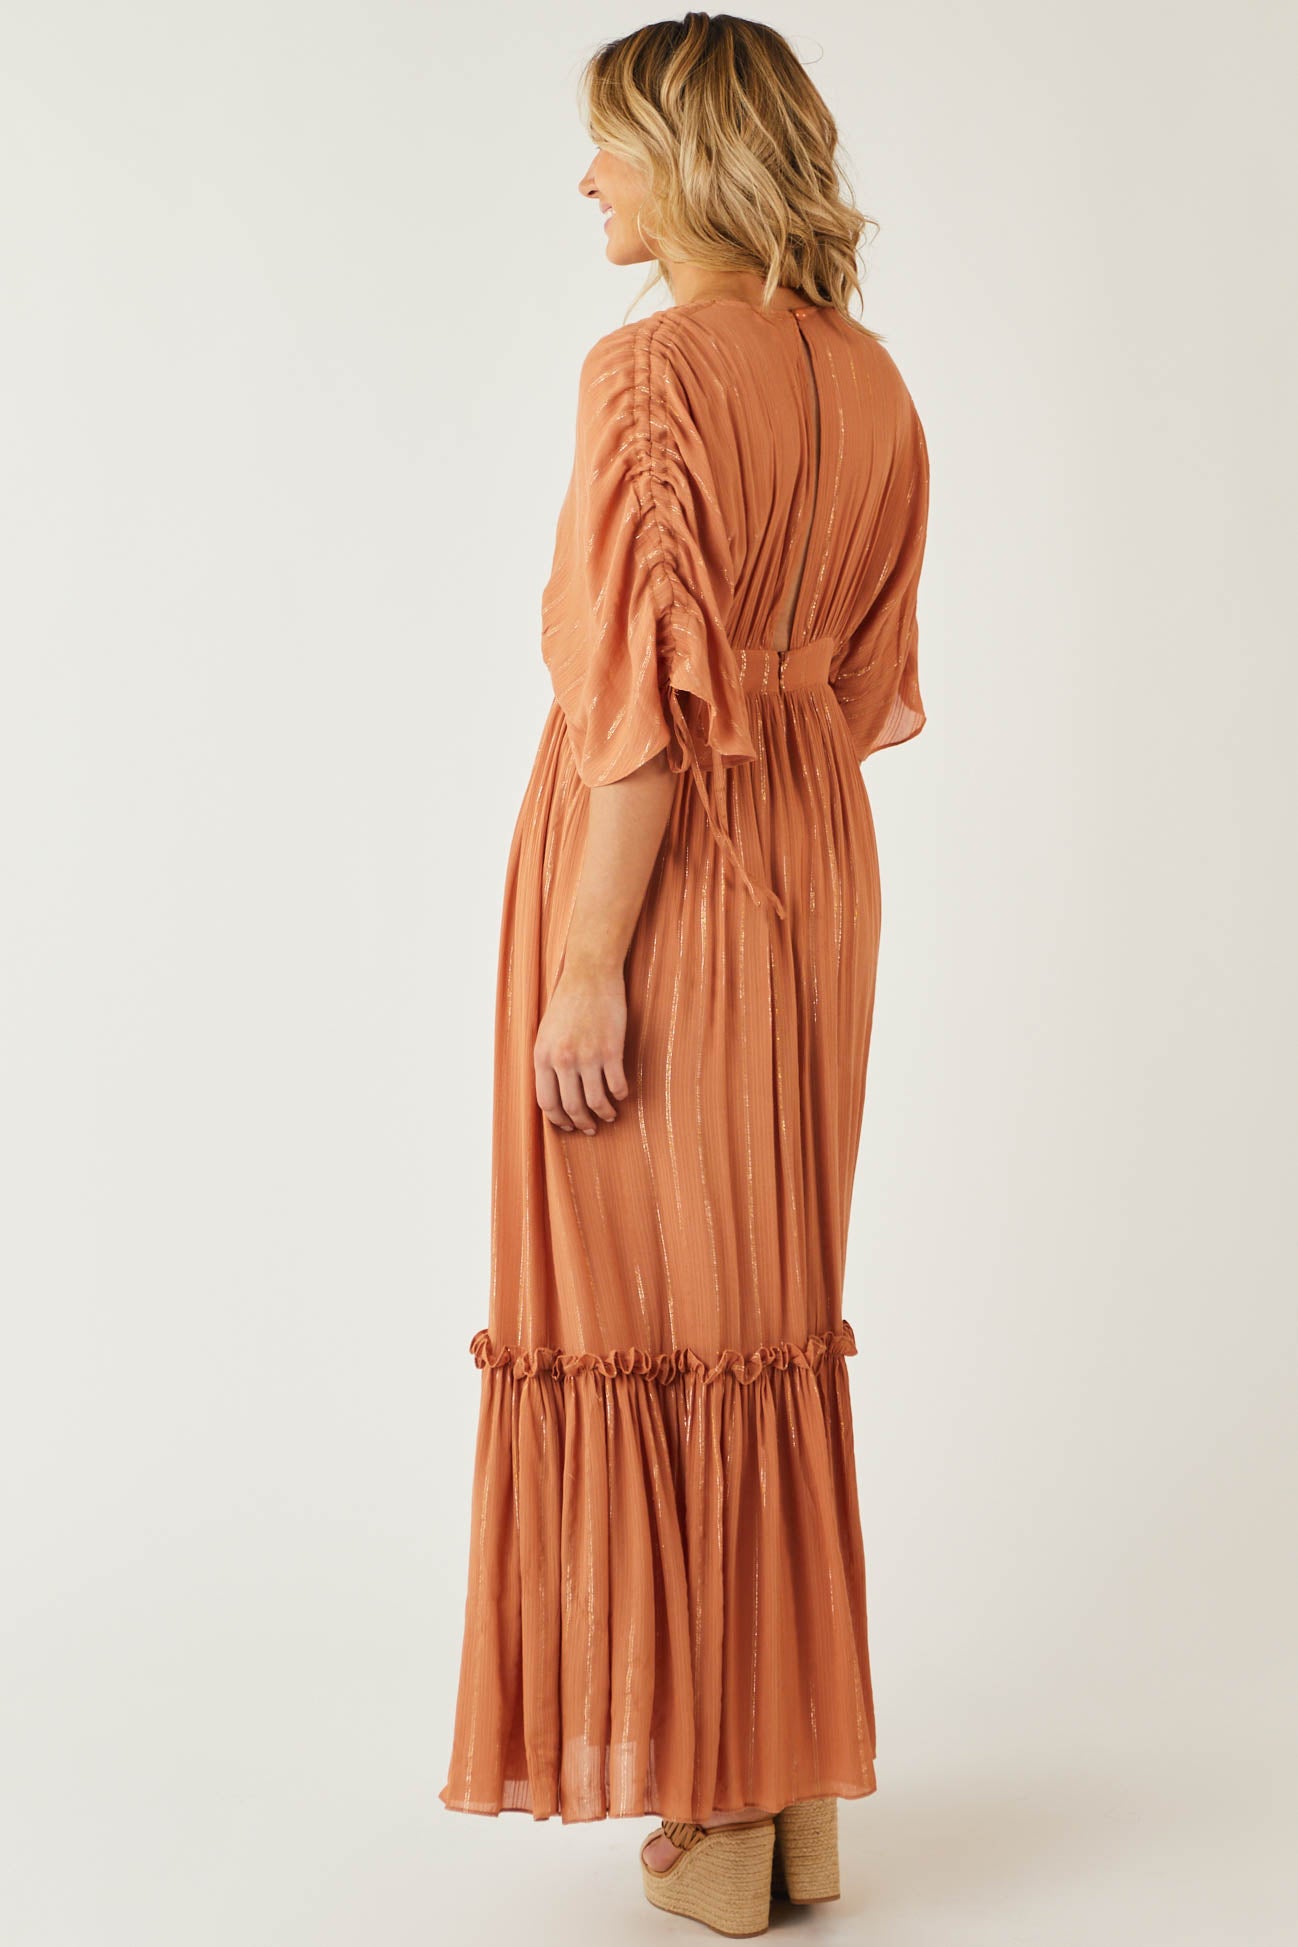 Pale Sandstone Metallic Threaded Woven Maxi Dress